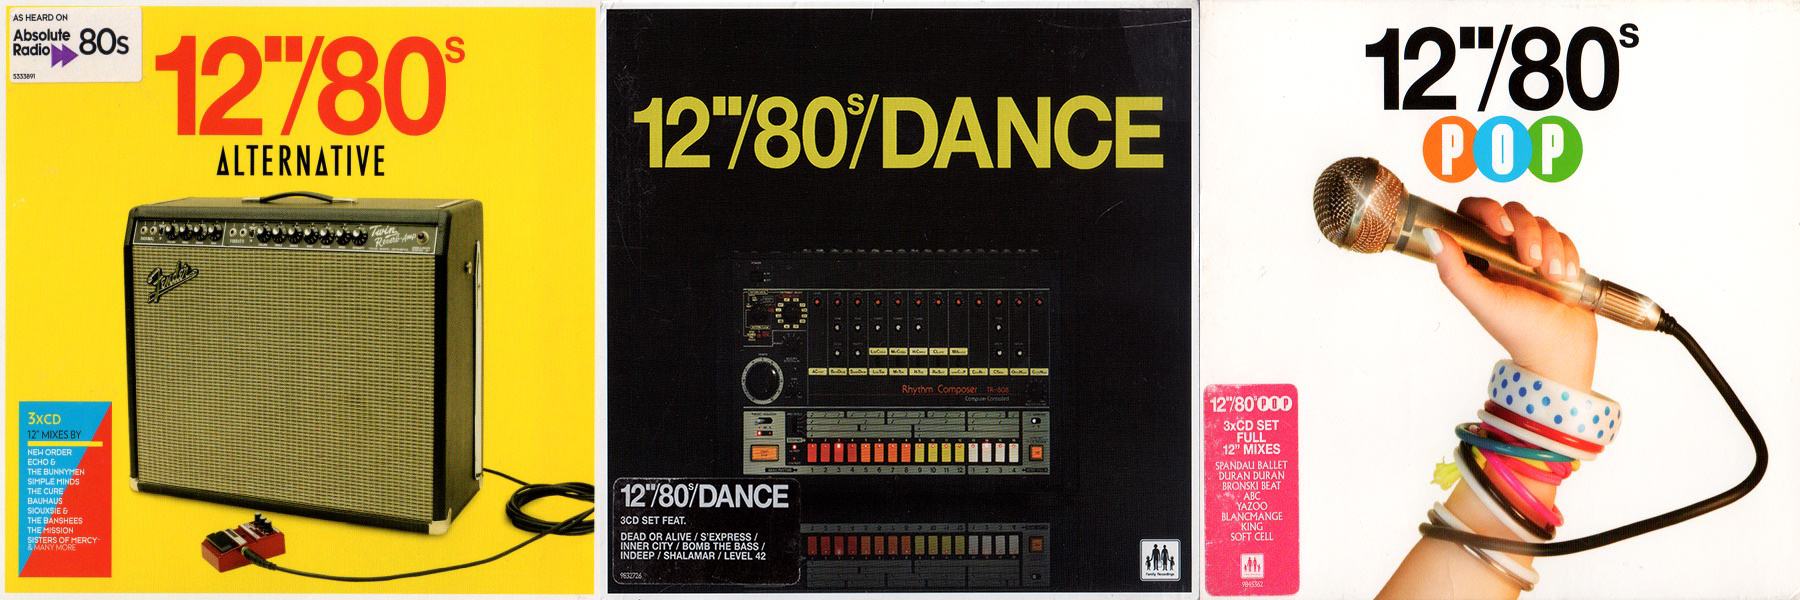 12'' 80's - Alternative (3Cd) - Dance (3Cd) & Pop (3Cd)